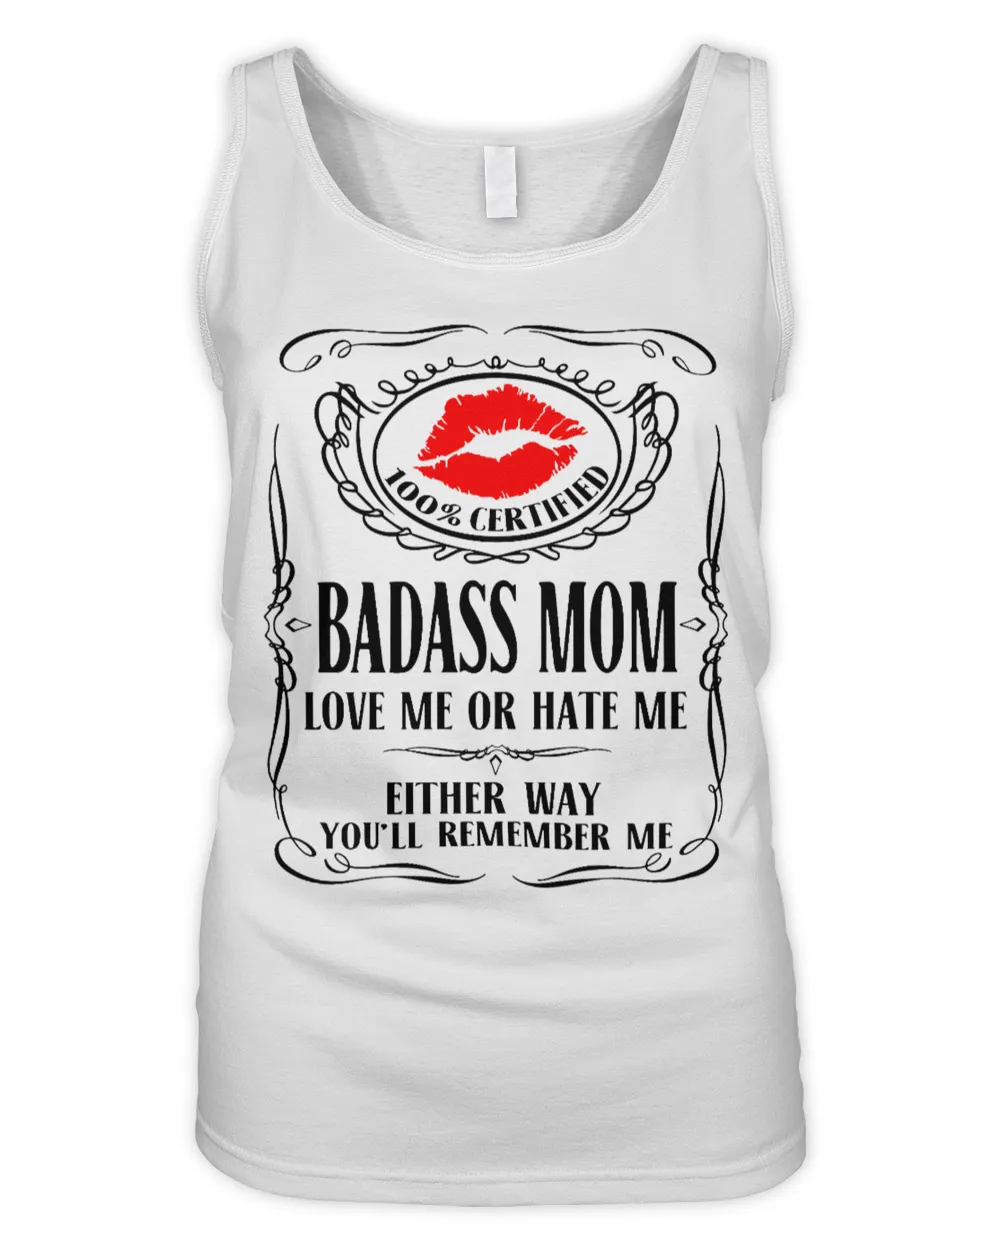 badass mom - love me or hate me